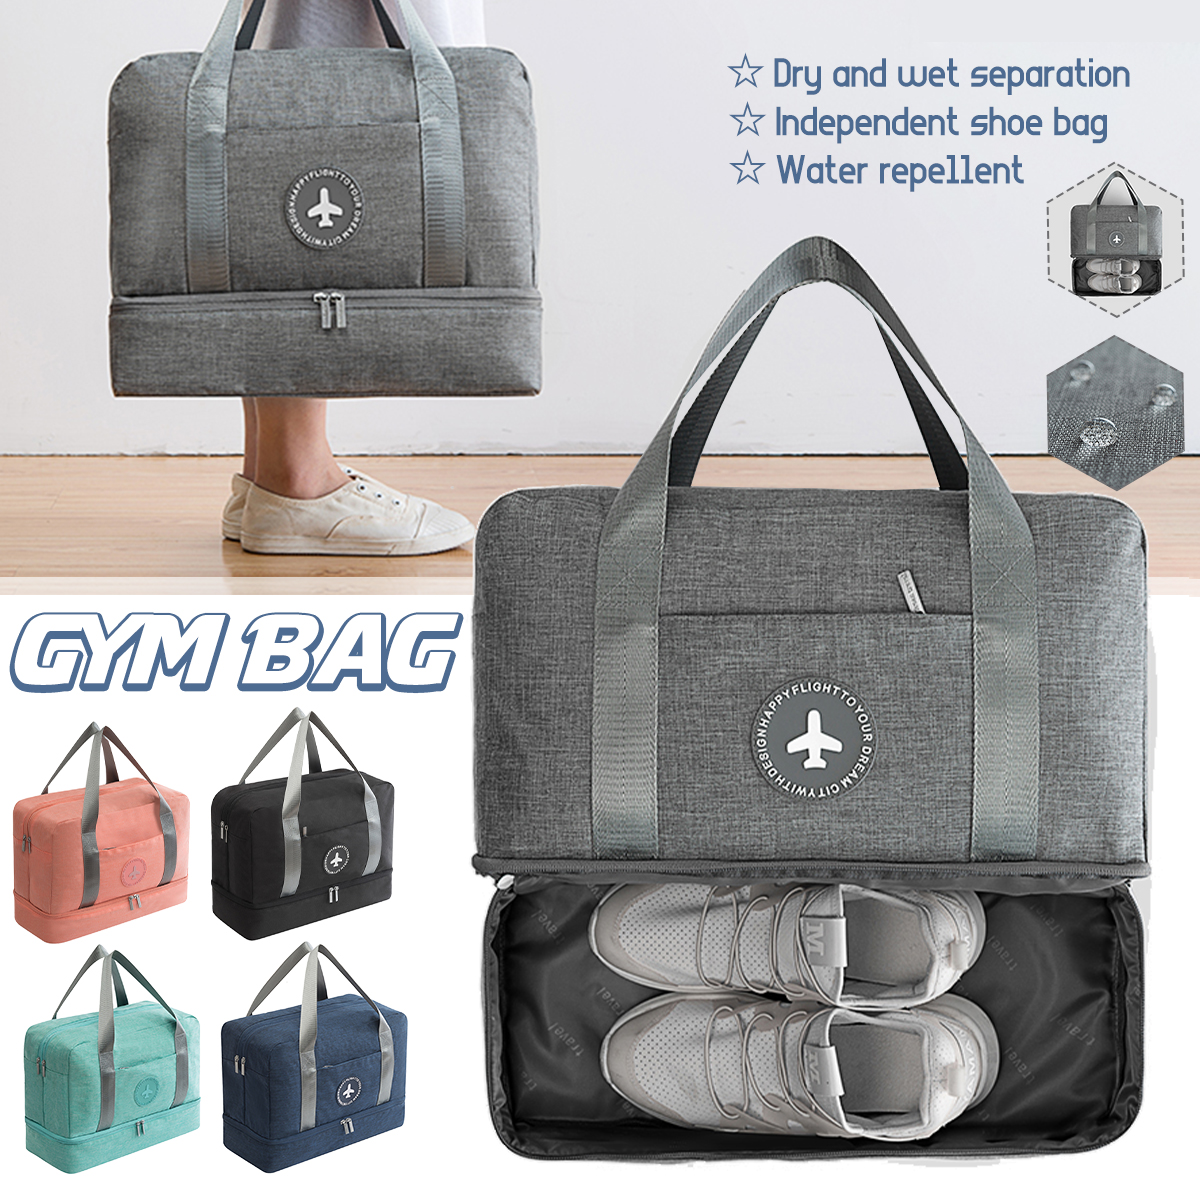 Portable-Dry-and-Wet-Separation-Handbag-Waterproof-Beach-Bag-Outdoor-Traveling-Shoe-Bag-Swimwear-Sto-1560820-1